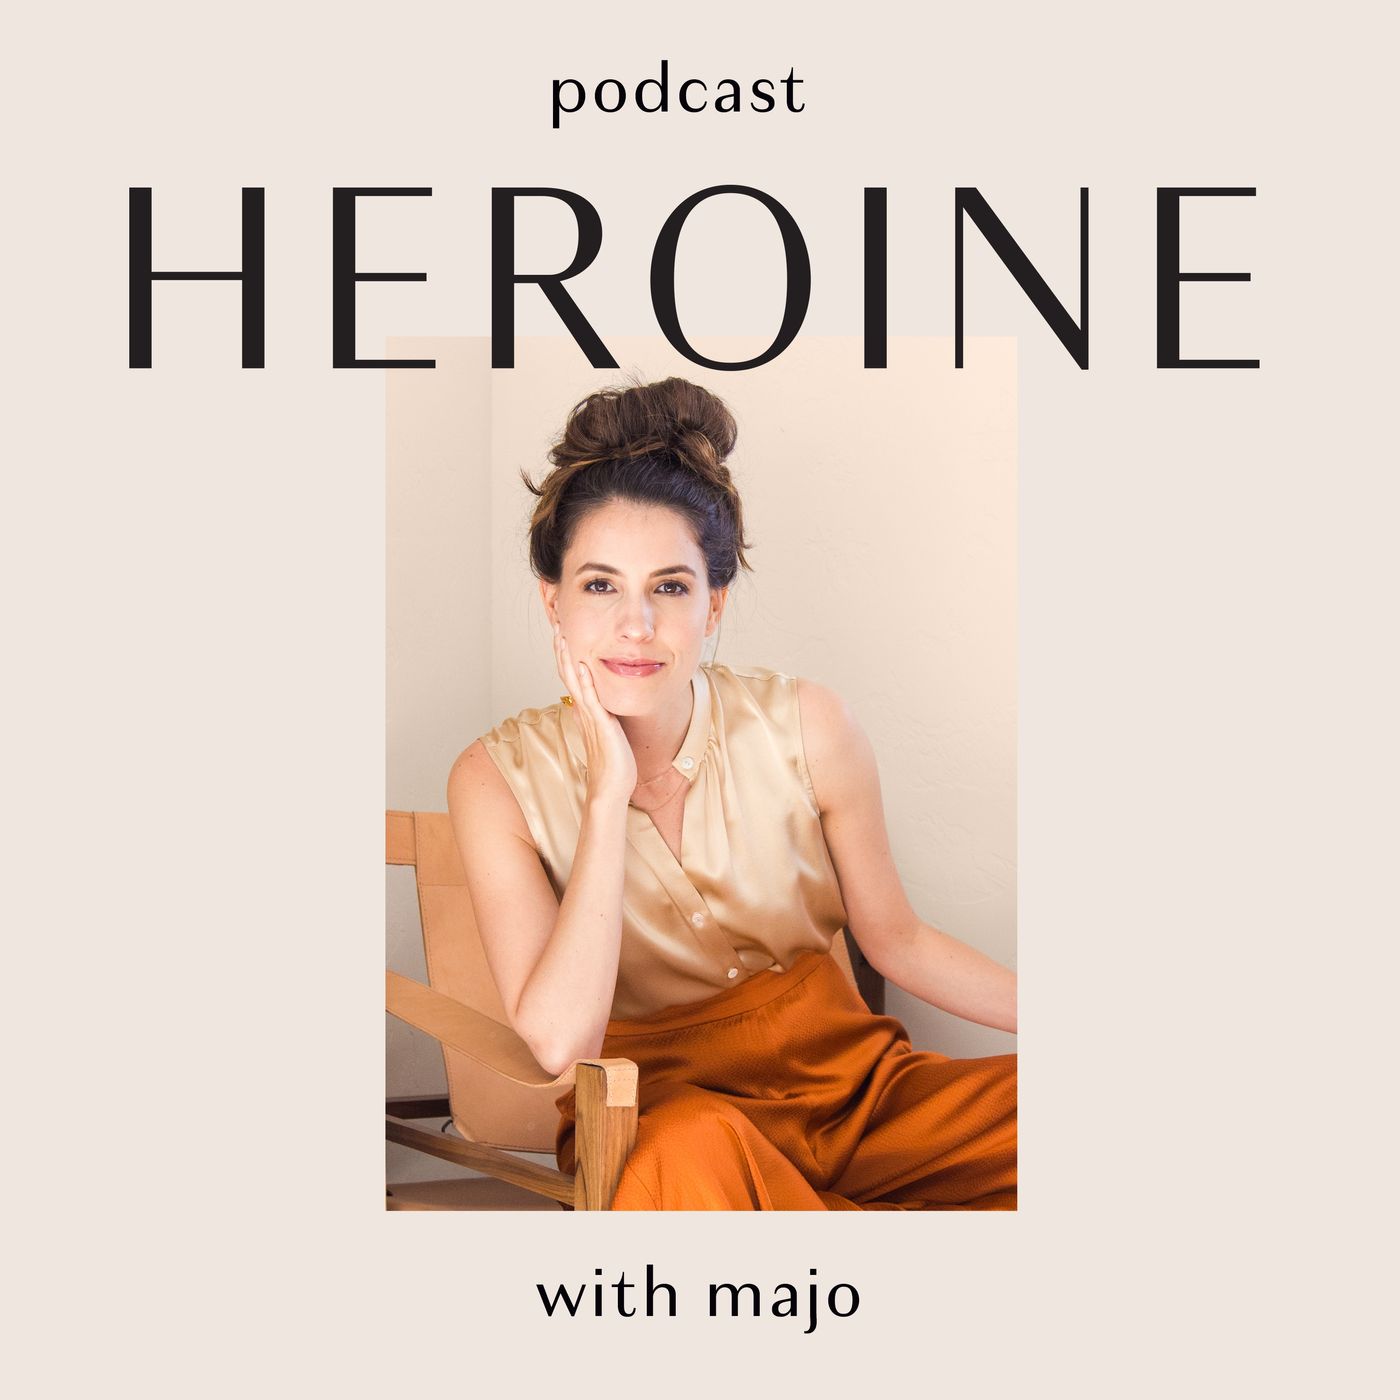 Heroine: Women’s Creative Leadership, Confidence, Wisdom